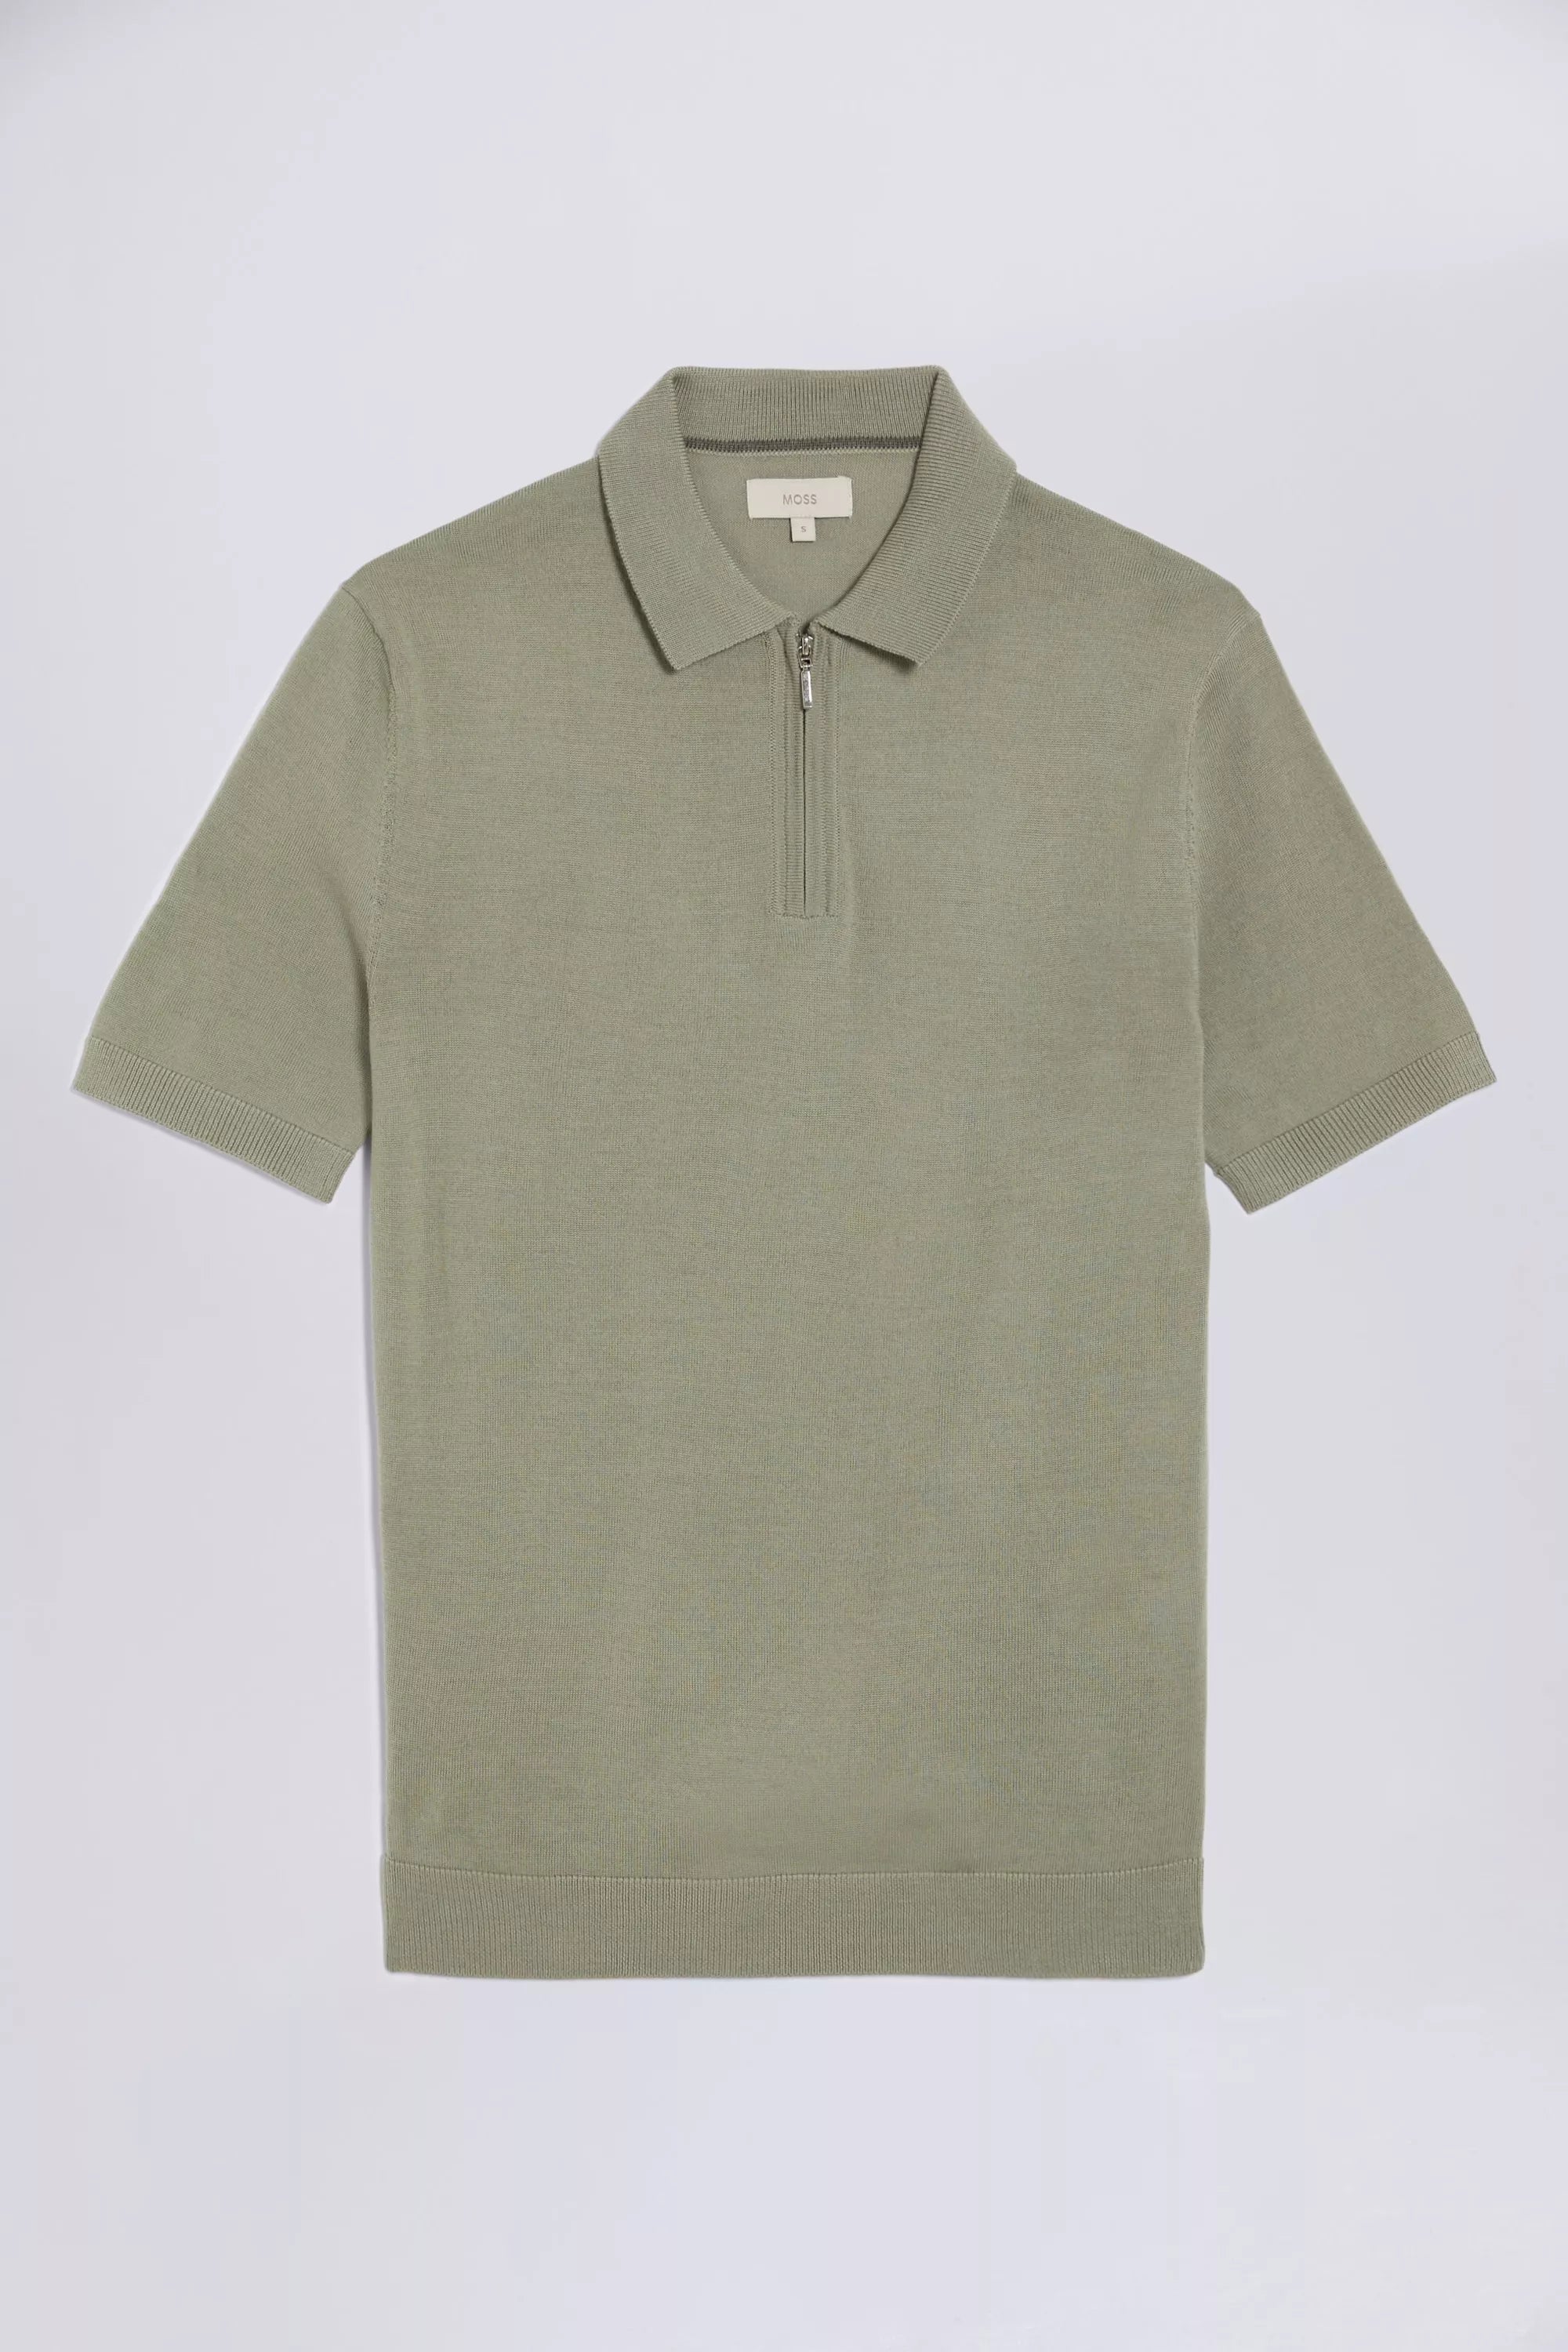 MOSS | Sage Green Merino Quarter Zip Polo Shirt | Moss Box